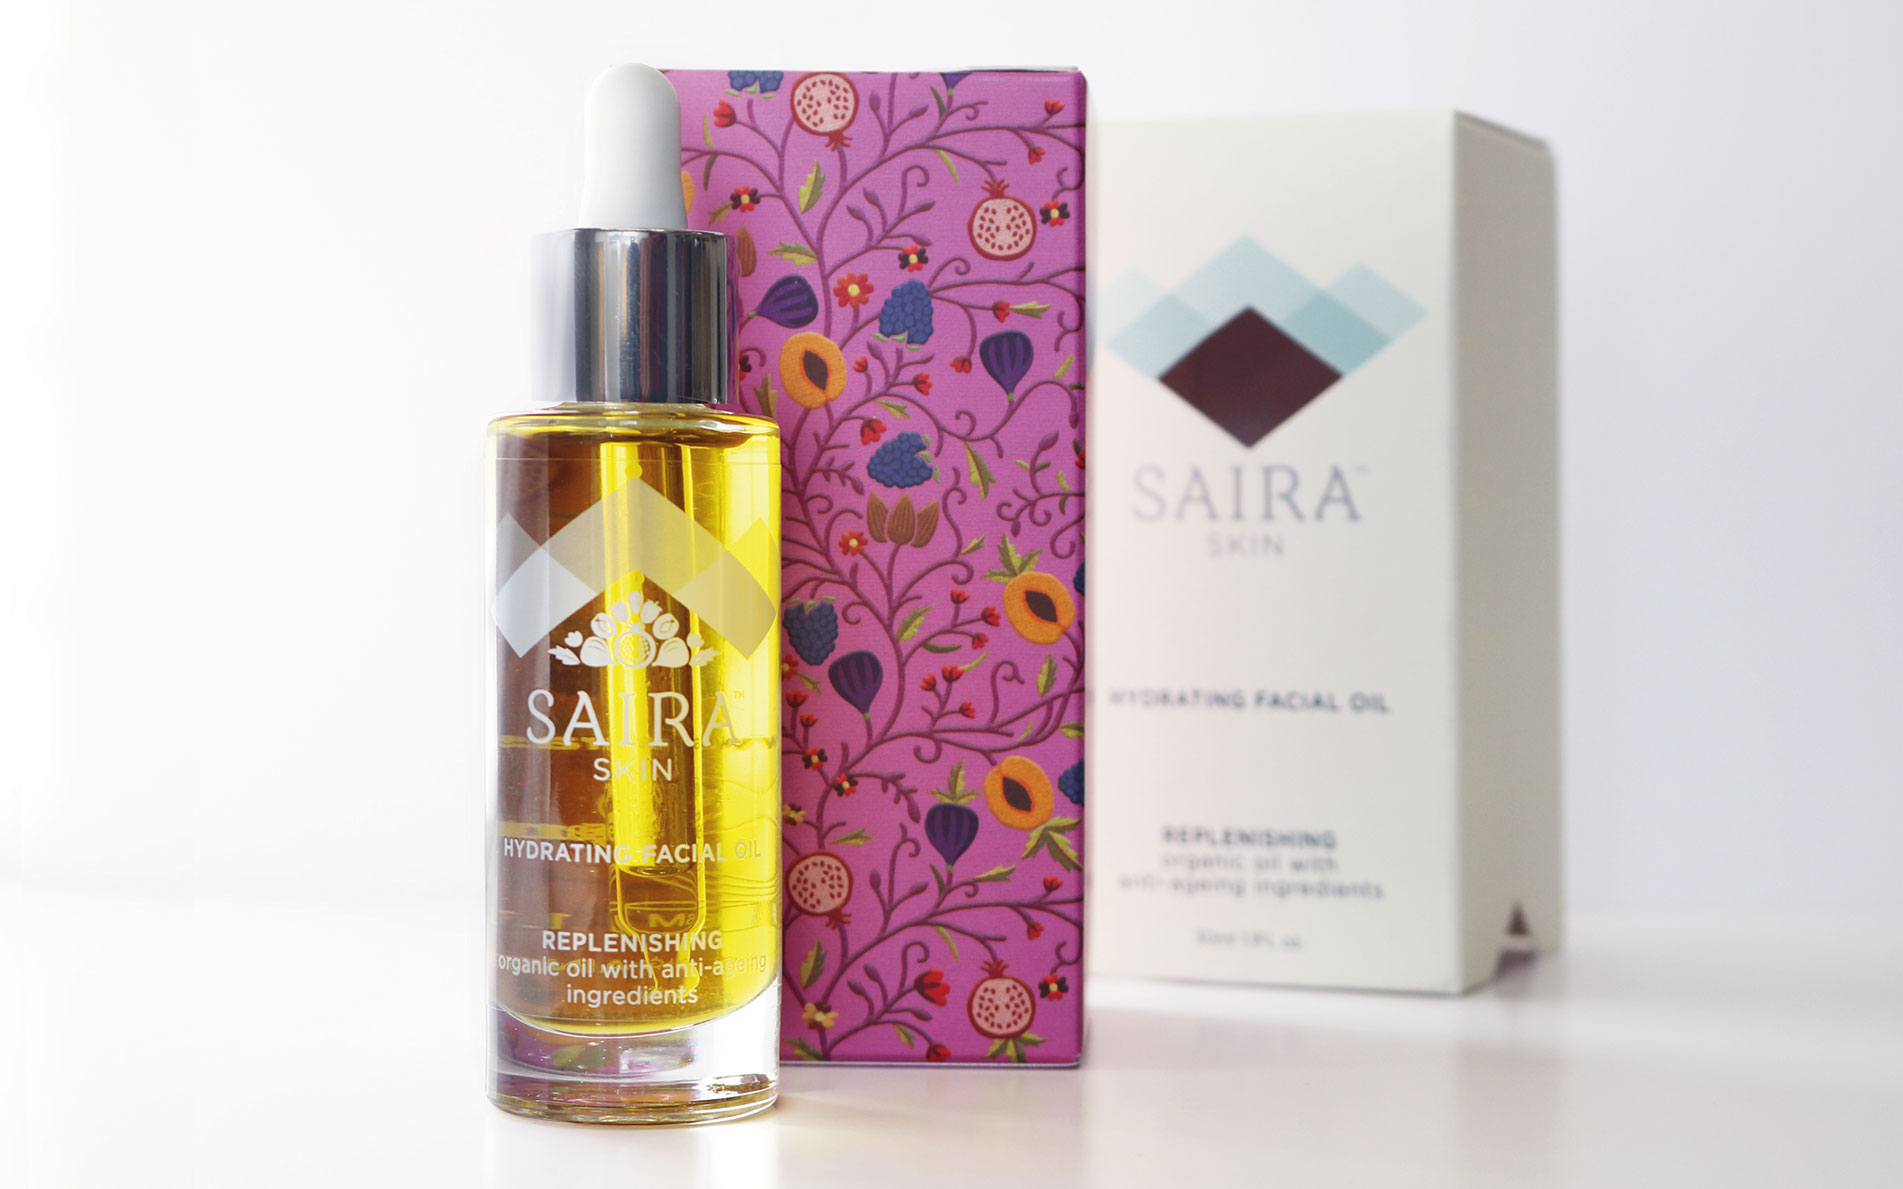 Saira Skin organic face oil - Rylands Brand Design 